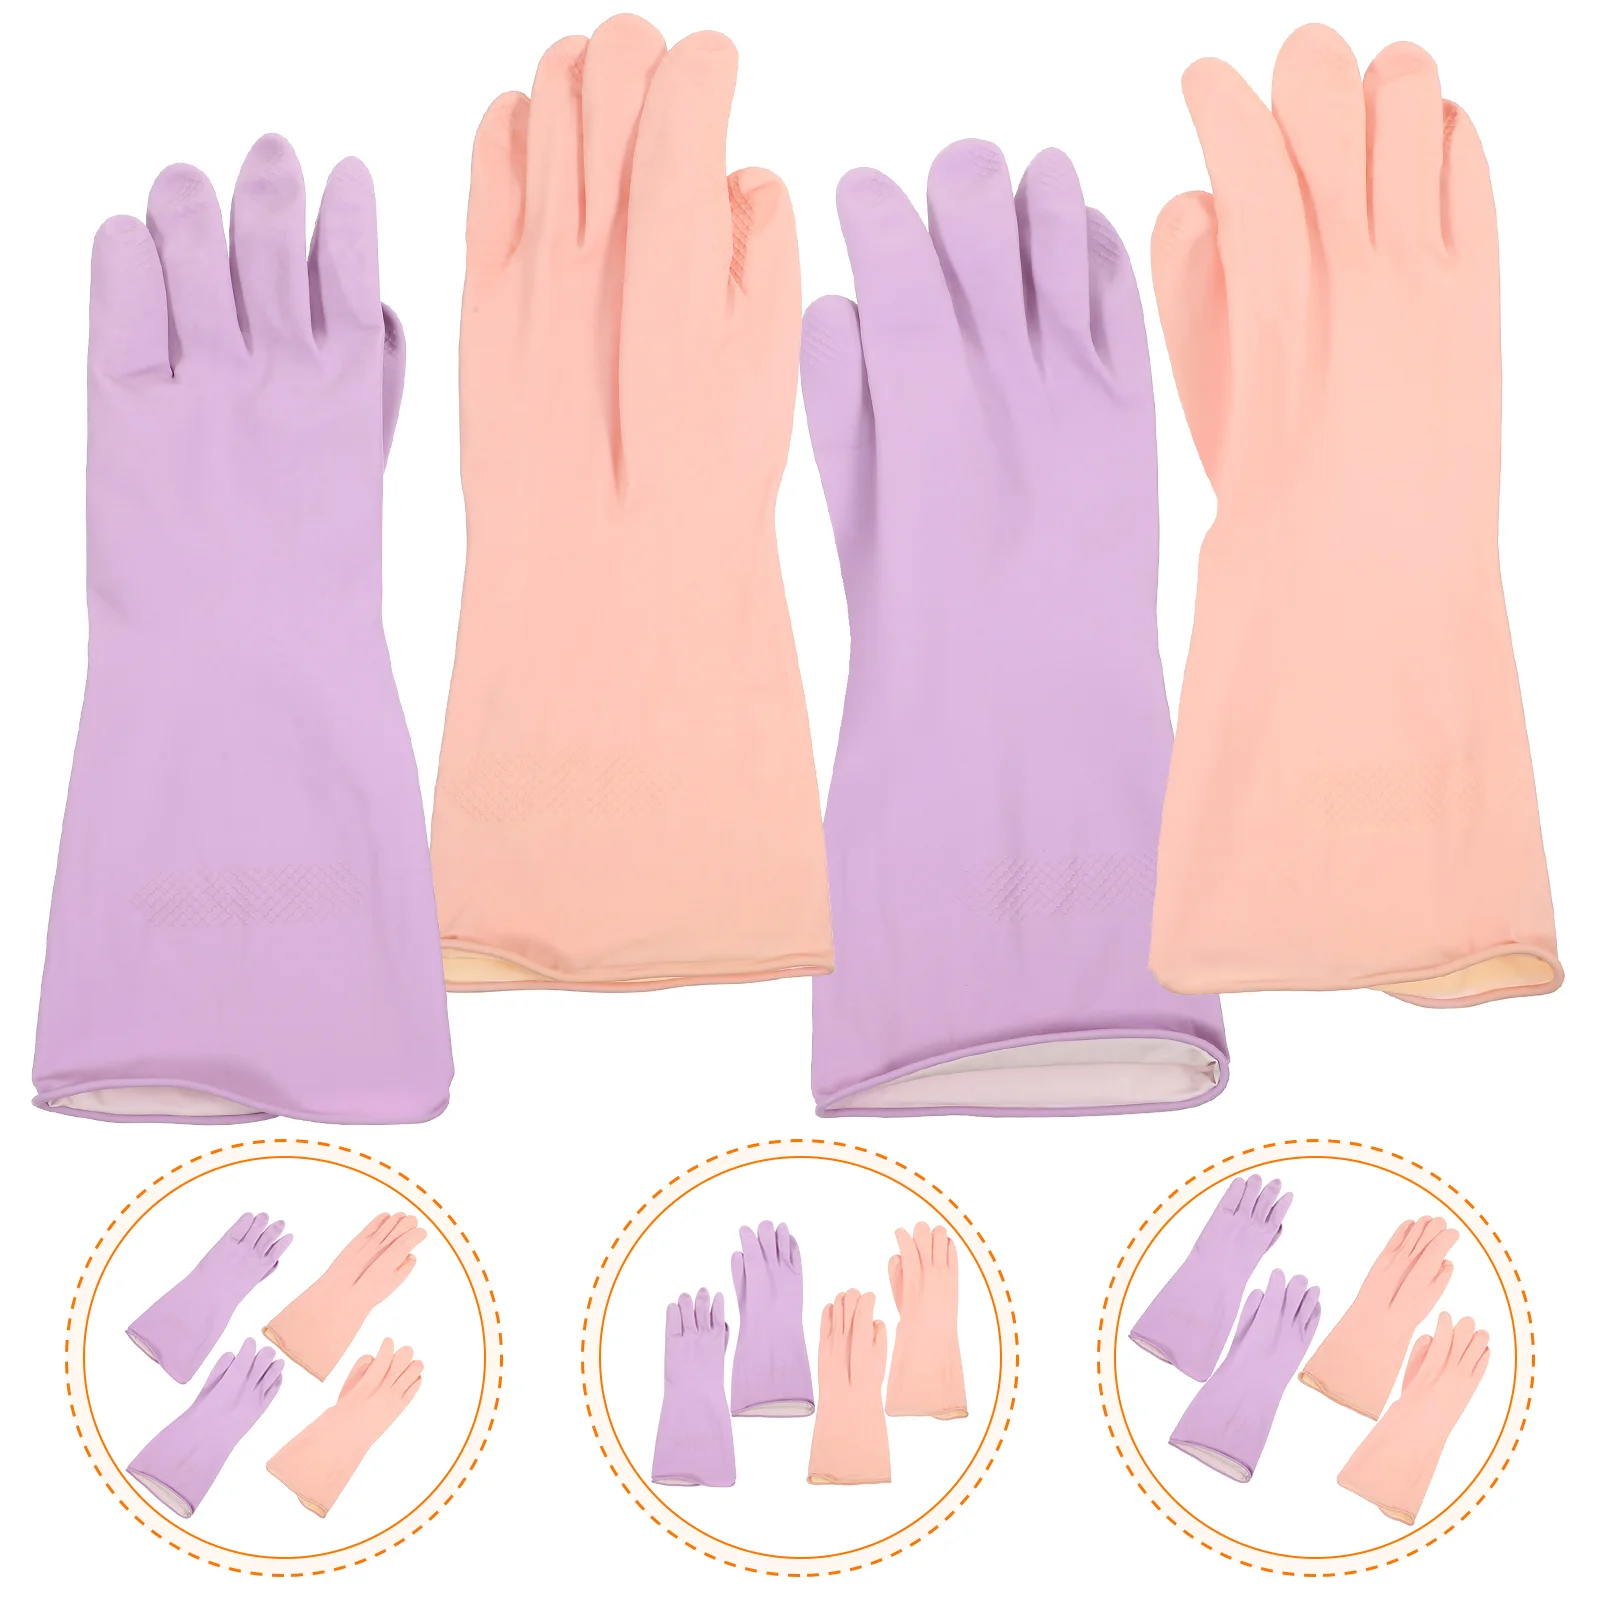 

2 Pairs of Dish Washing Gloves Reusable Household Chores Latex Gloves Latex Dishwashing Gloves